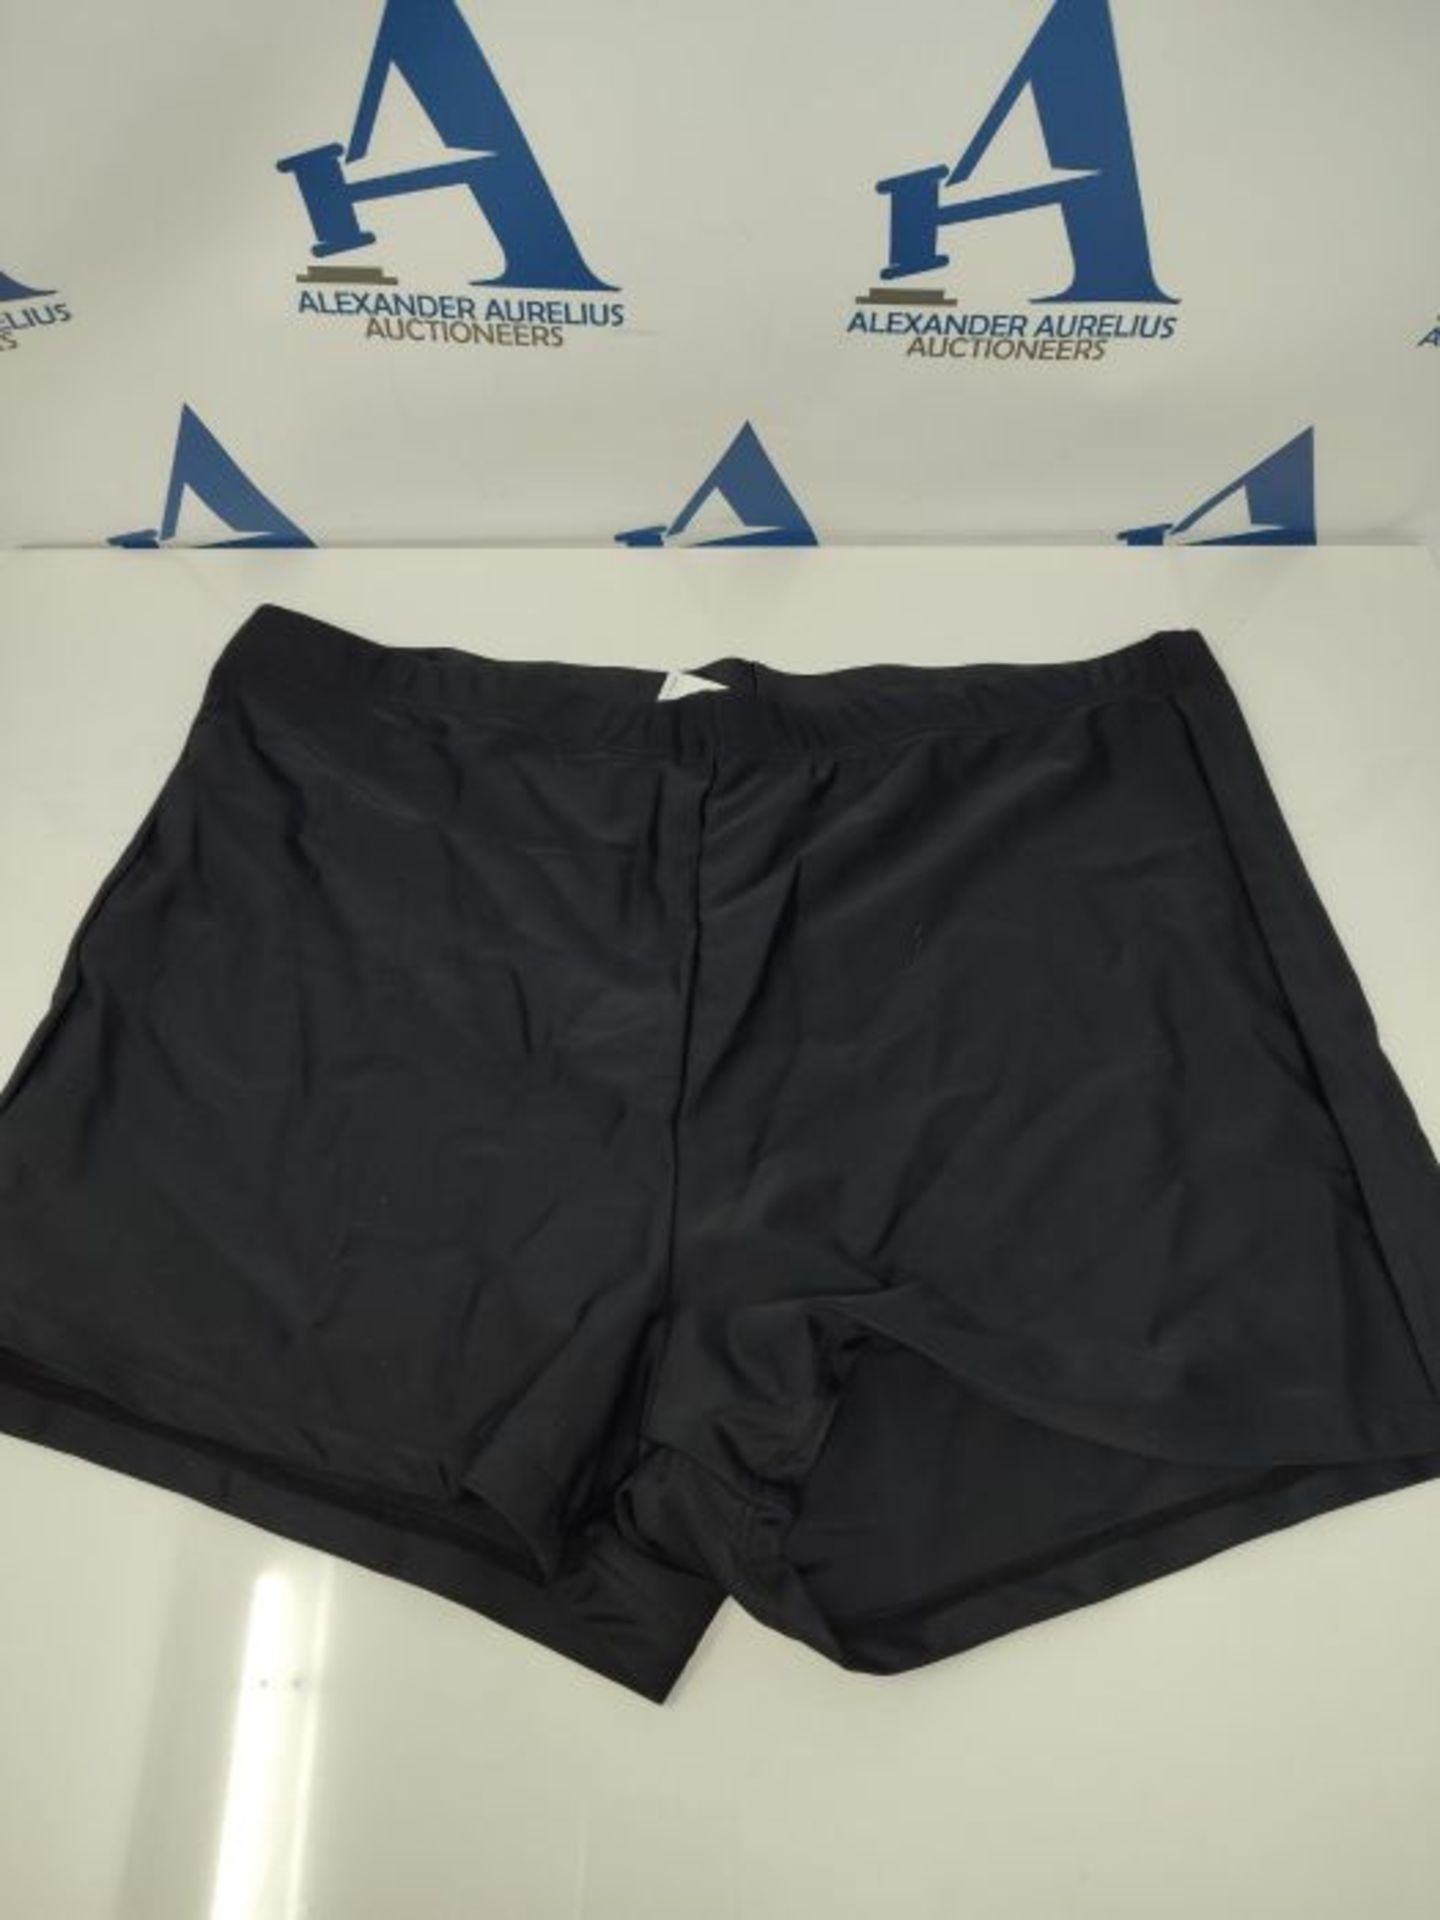 Halcurt Women's Tankini Swimsuit Blouson Swimsuit Plunge Boy Shorts Swimwear, Black/Pa - Image 5 of 5